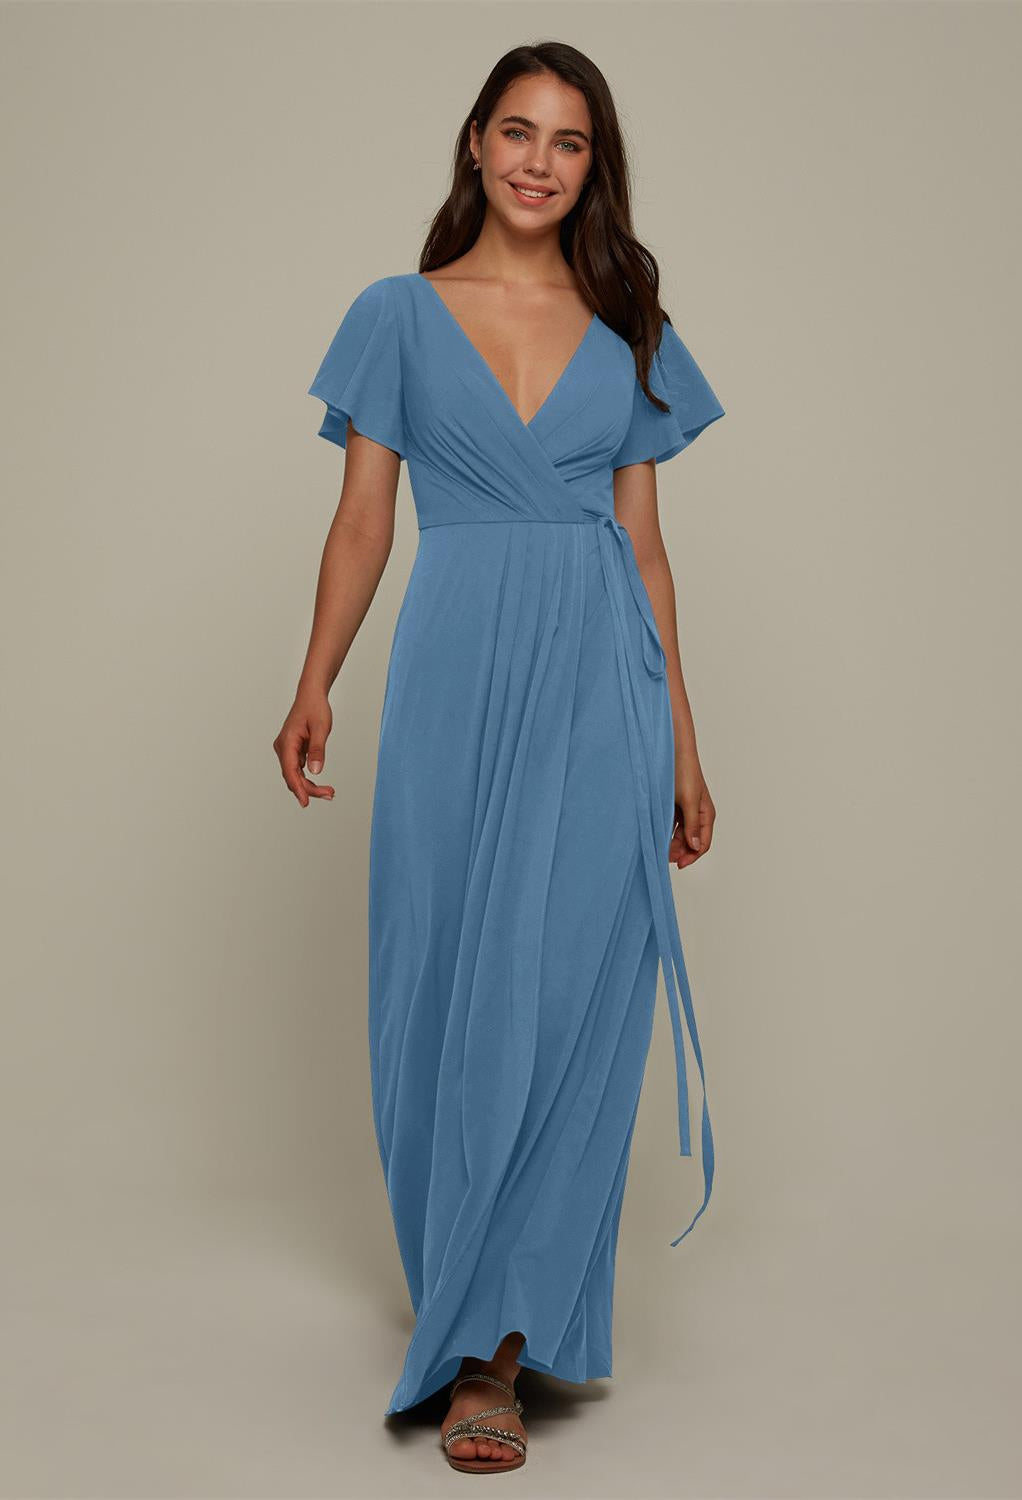 A woman wearing a blue Ellison - Chiffon Bridesmaid Dress - Off The Rack dress visited Bergamot Bridal, a bridal shop in London.